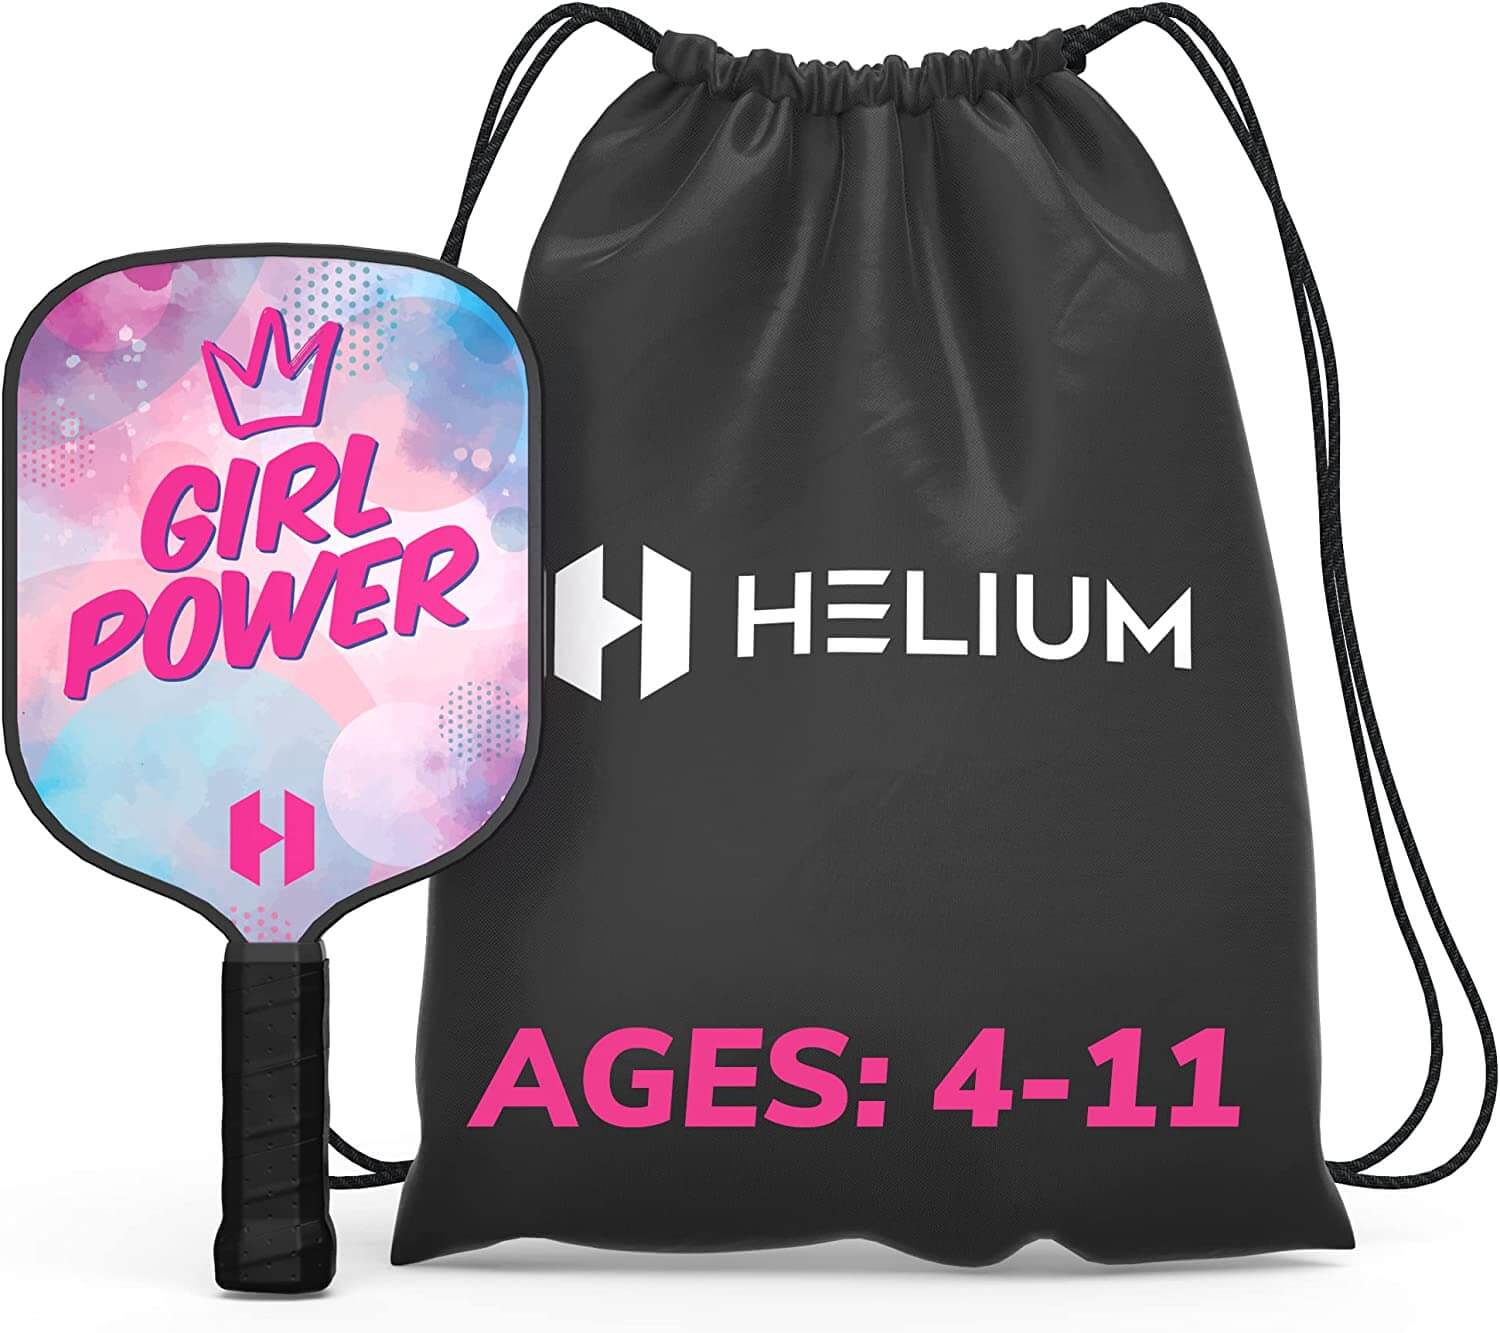 Helium Girl Power Junior Pickleball Paddle